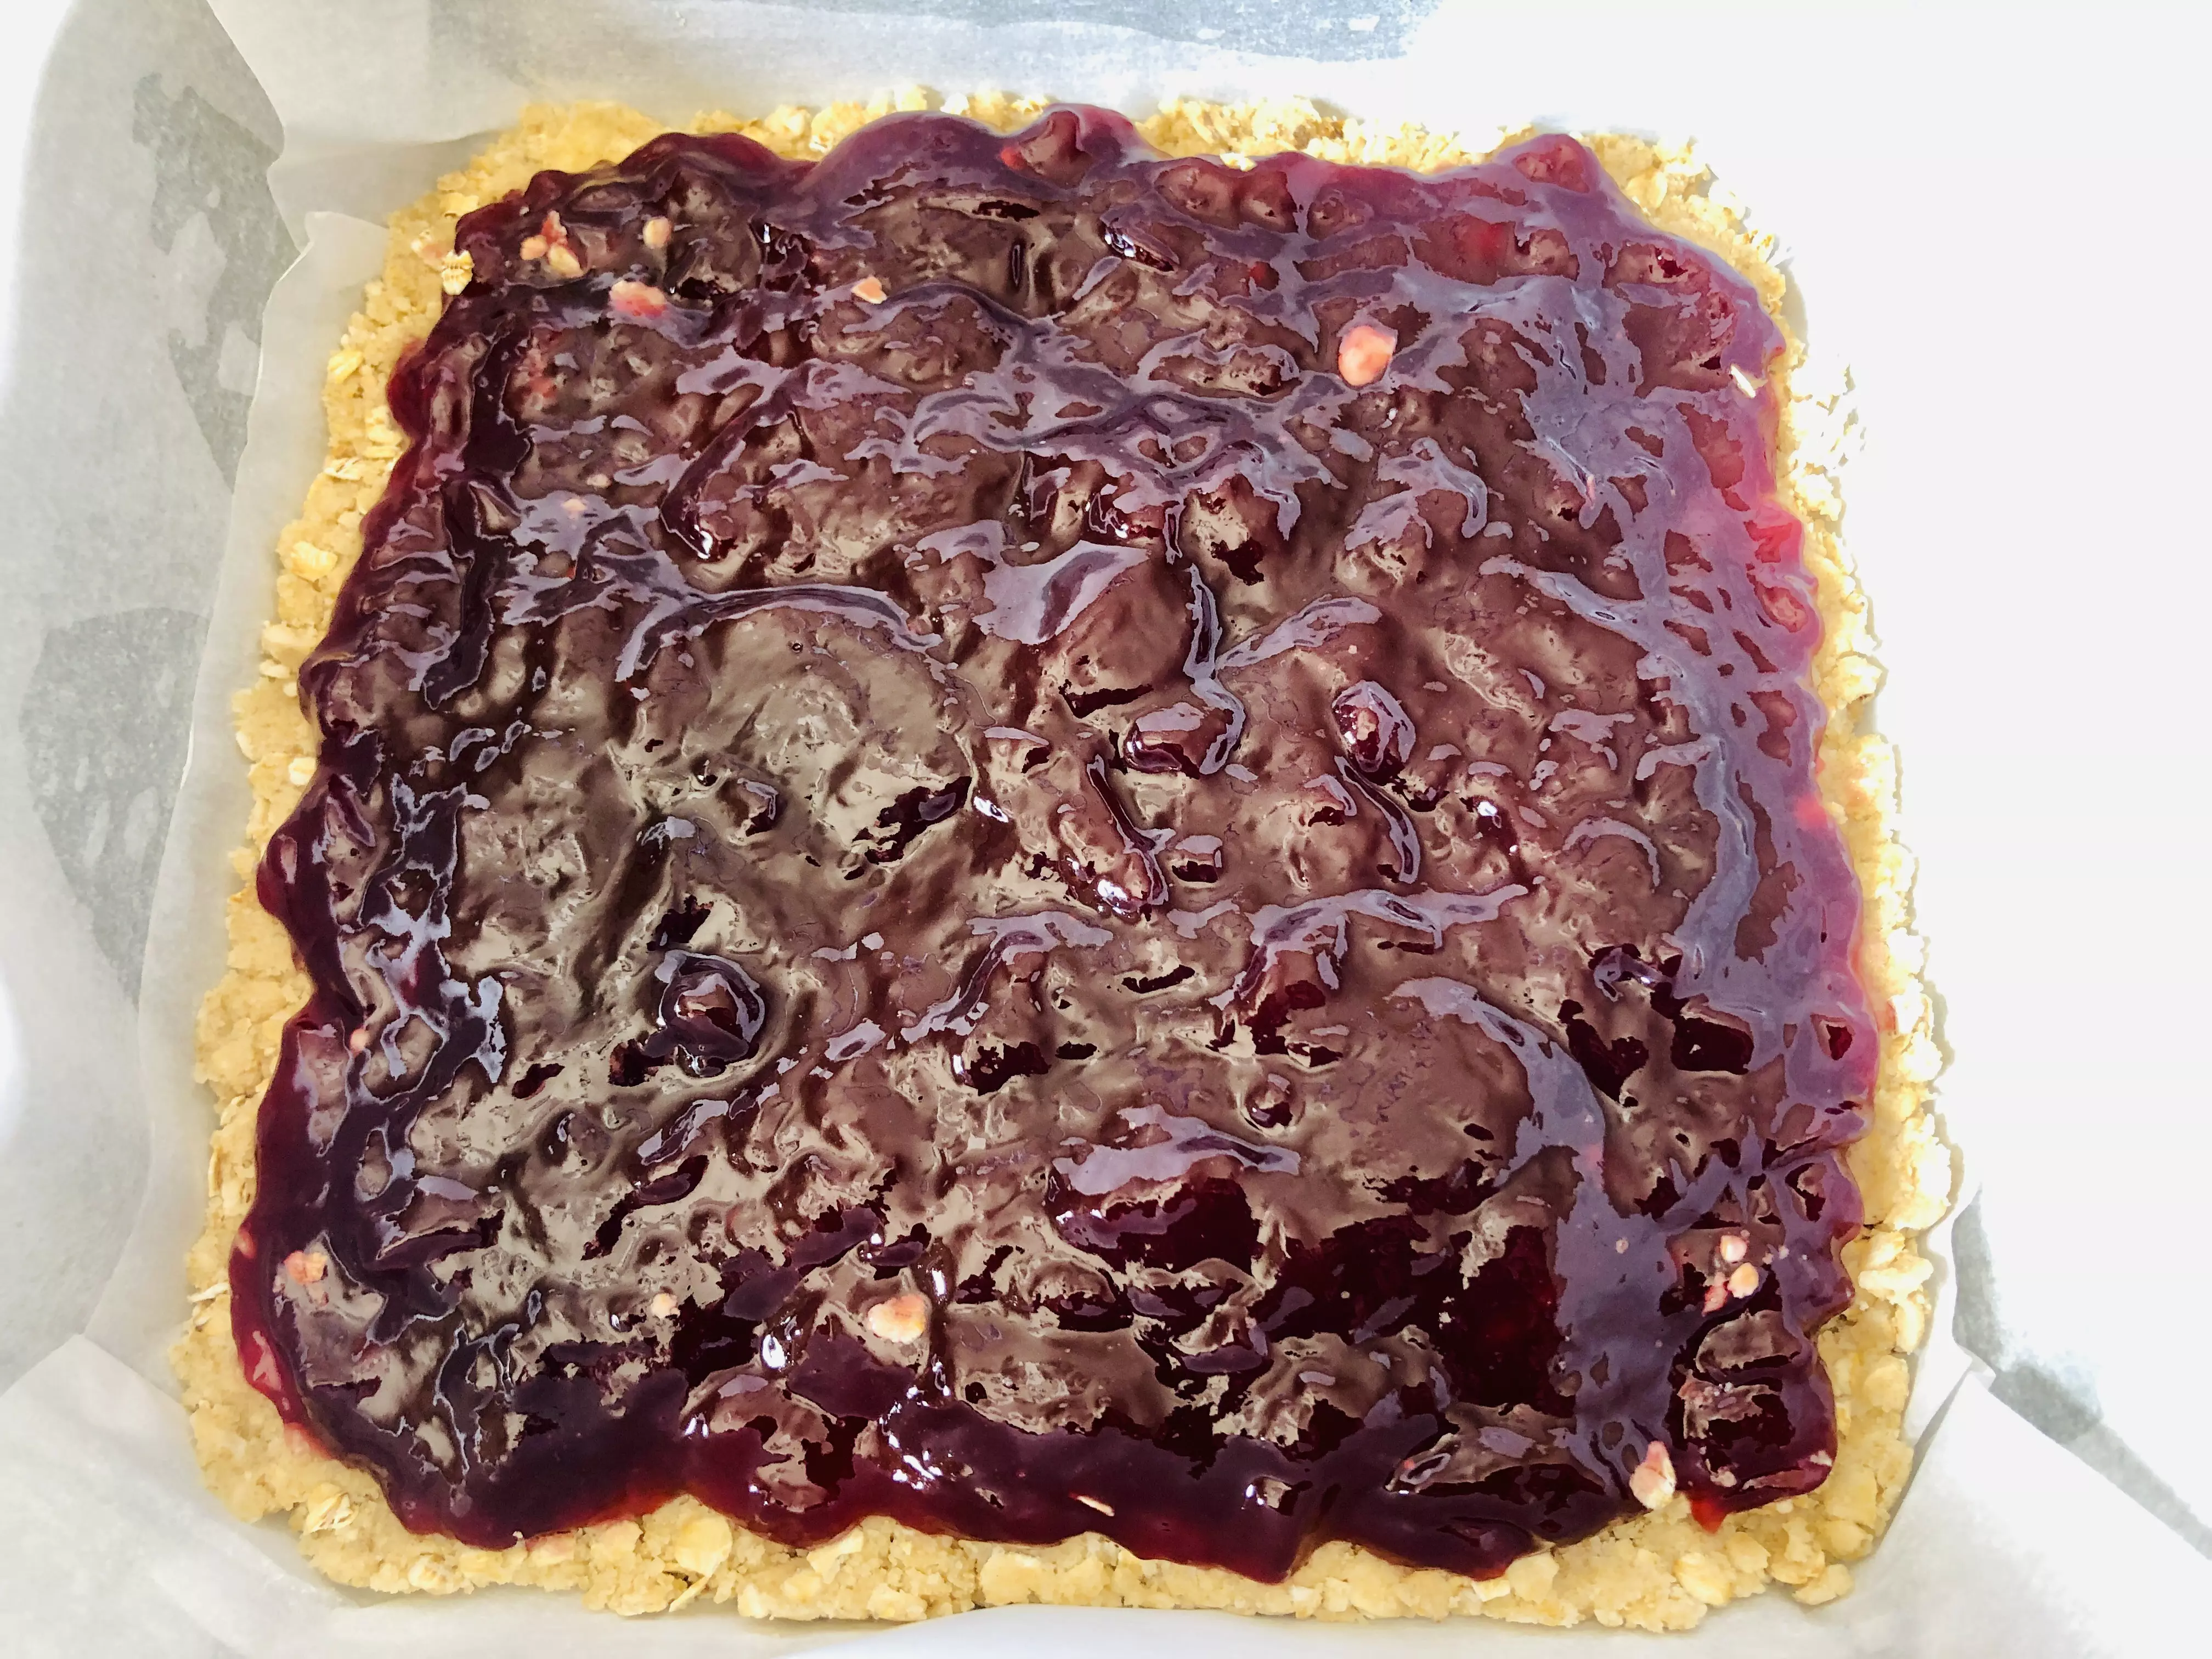 spreading jam on crust layer